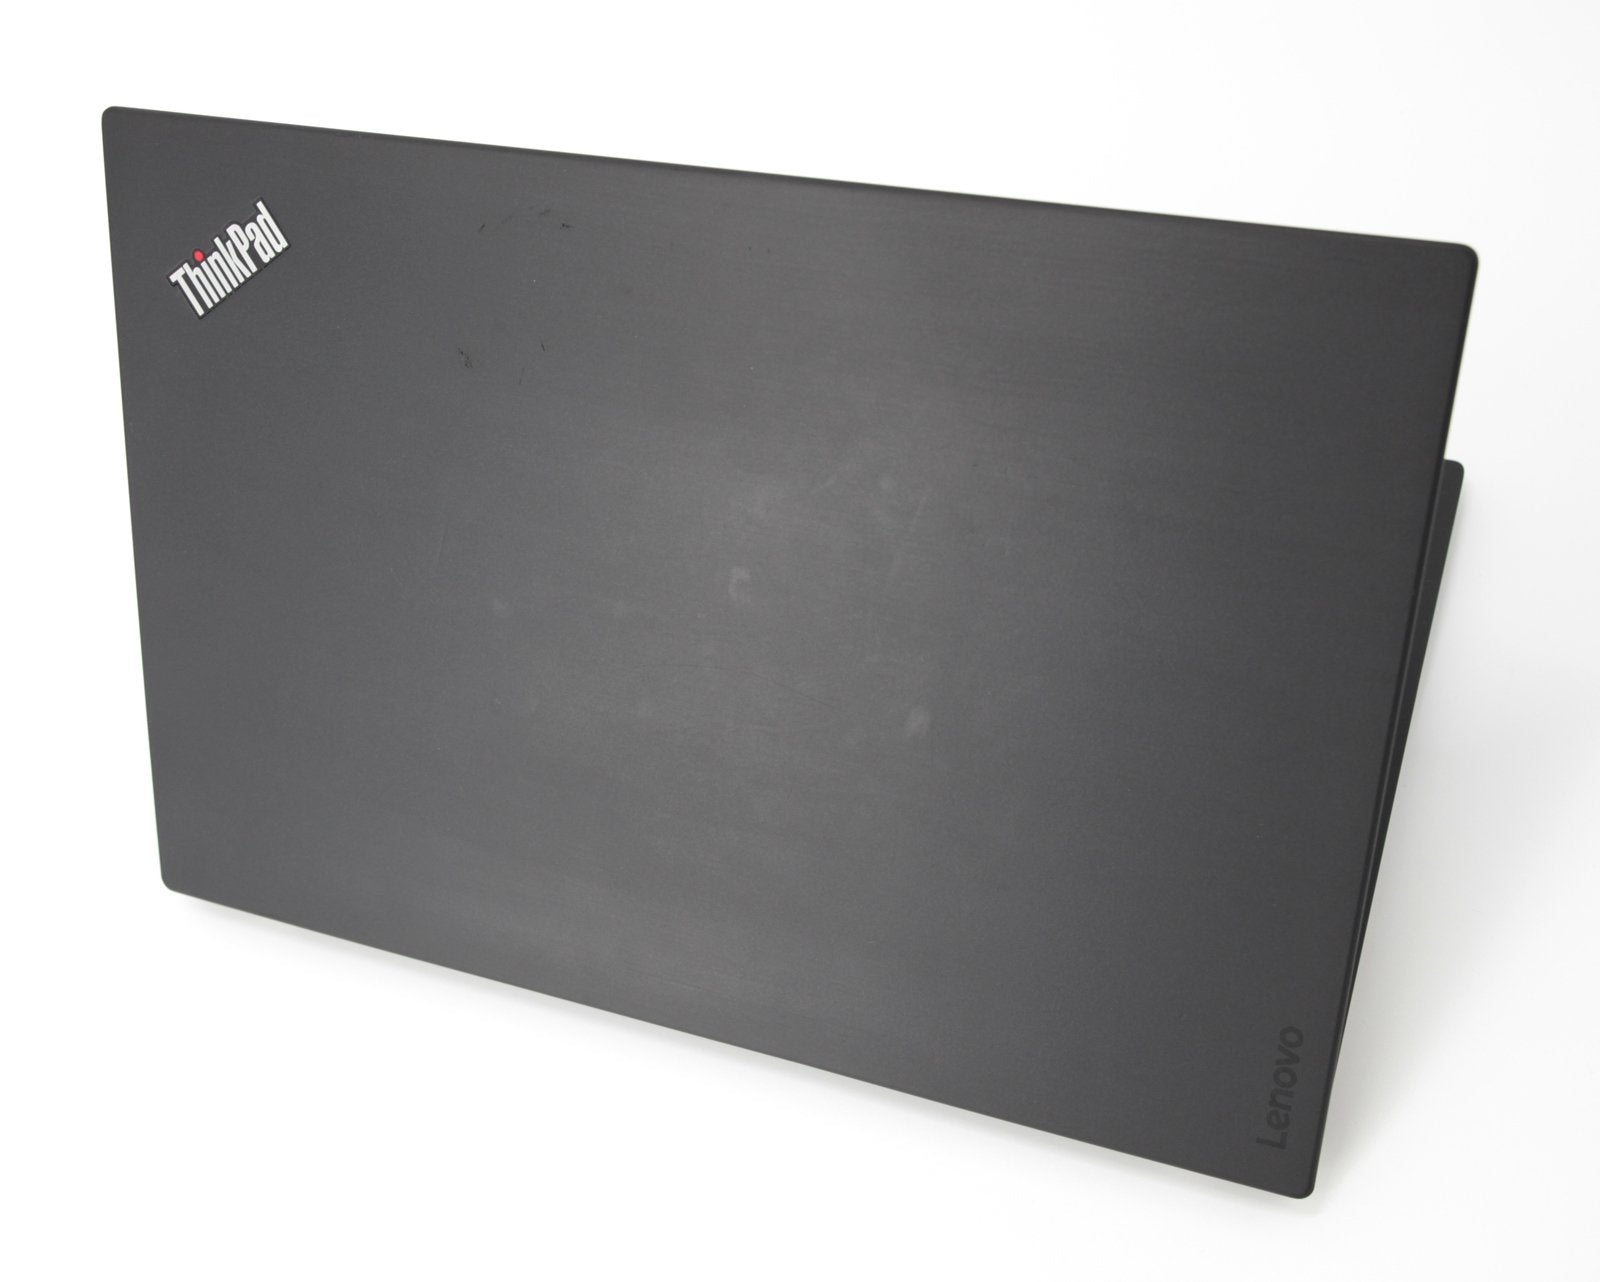 Lenovo Thinkpad X1 Carbon 5th Gen: 240GB SSD Core i5-6300U, 8GB, Warranty - CruiseTech